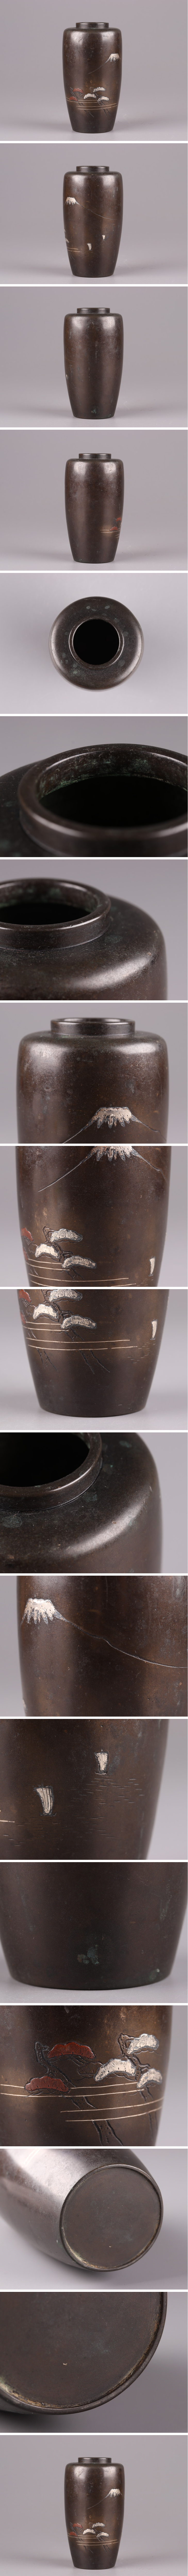 大阪販売古美術 古銅造 花瓶 銀象嵌 時代物 極上品 初だし品 3780 その他